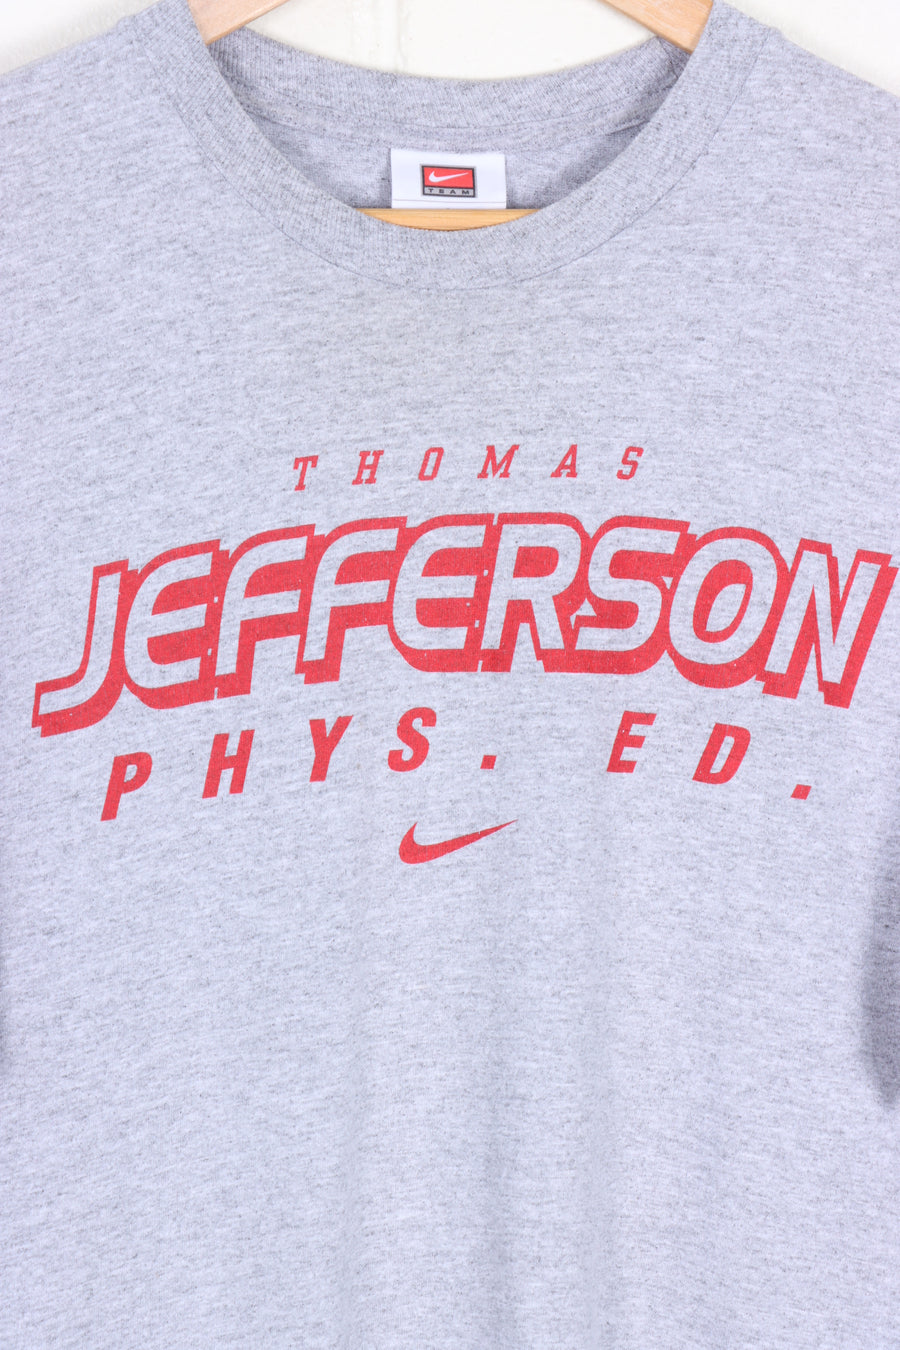 NIKE Centre Swoosh Thomas Jefferson Physical Ed Tee (L)